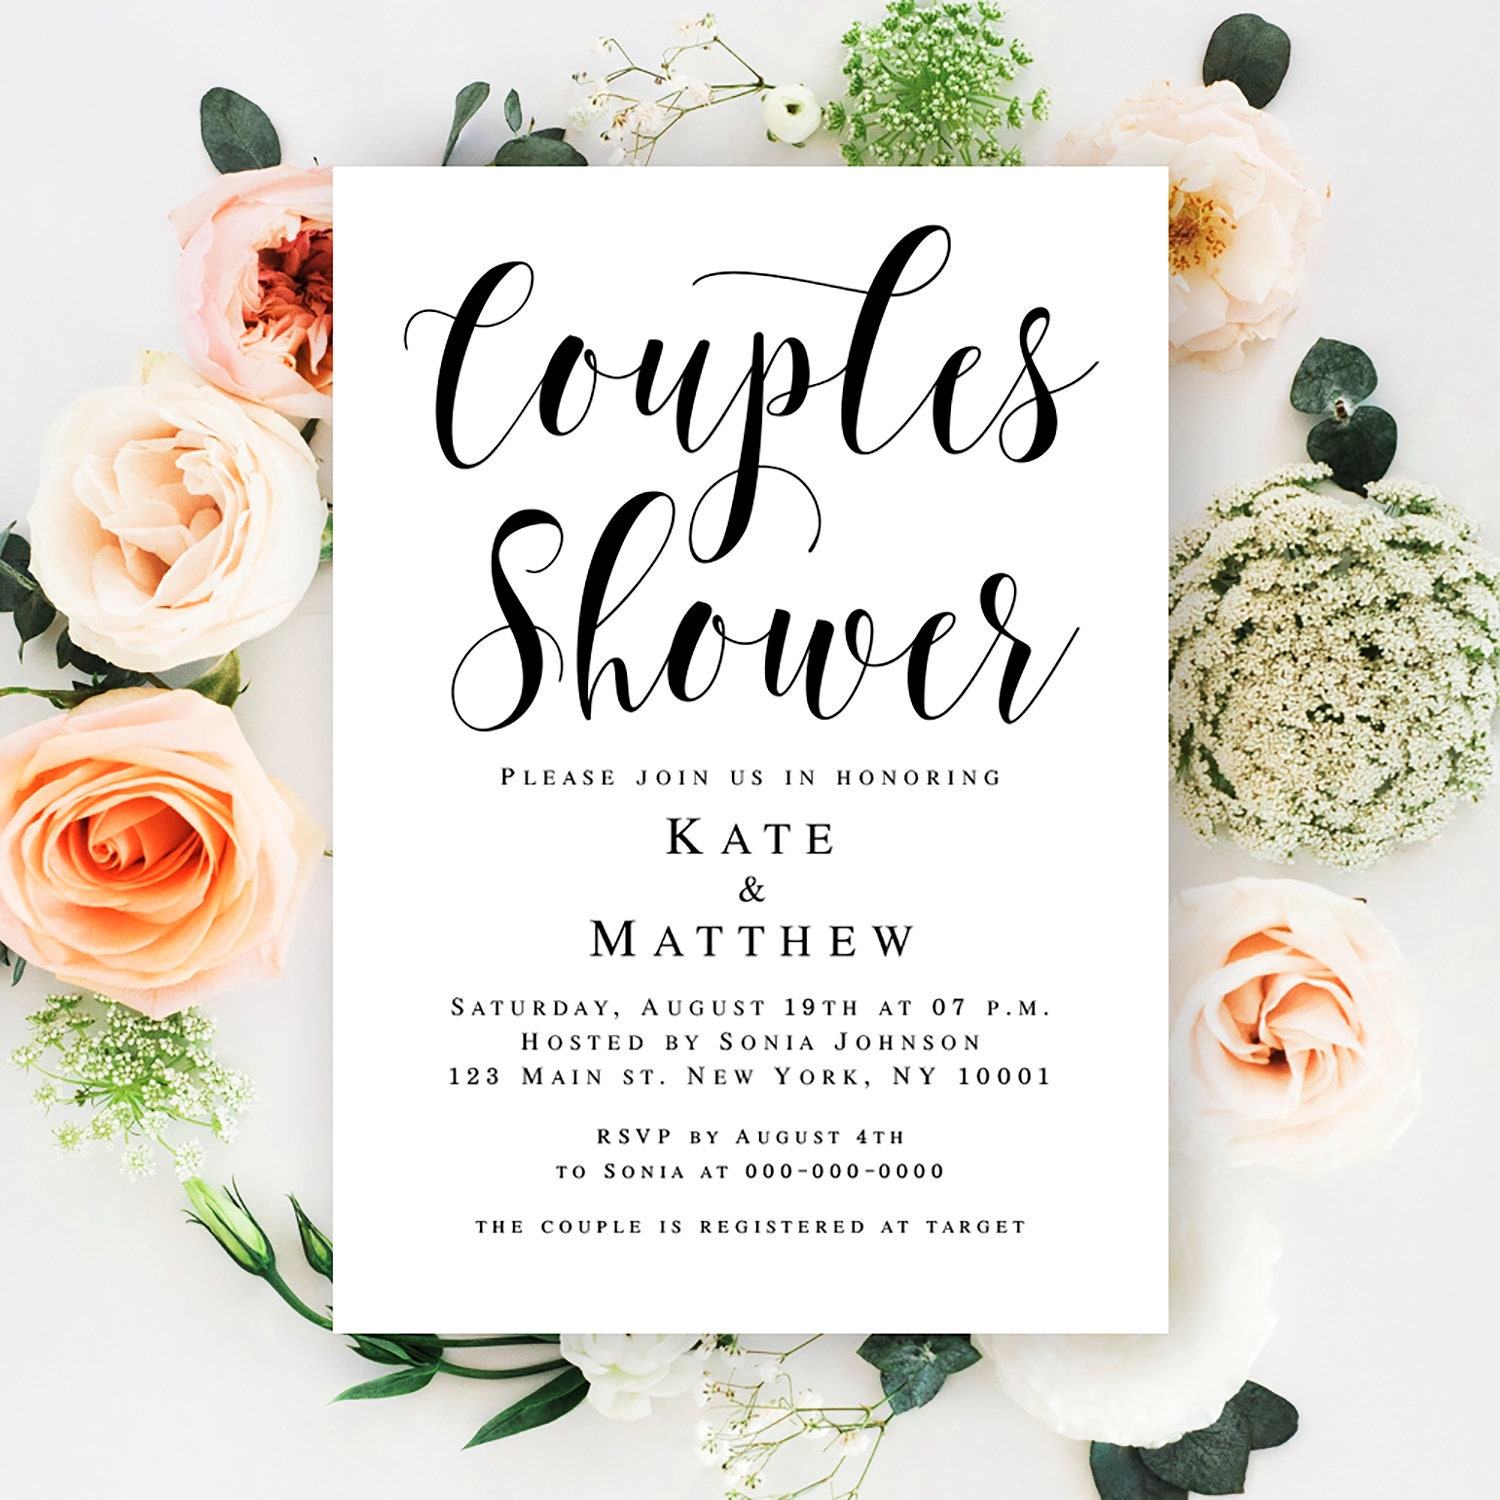 Couples shower invitation template Wedding shower invitation | Etsy